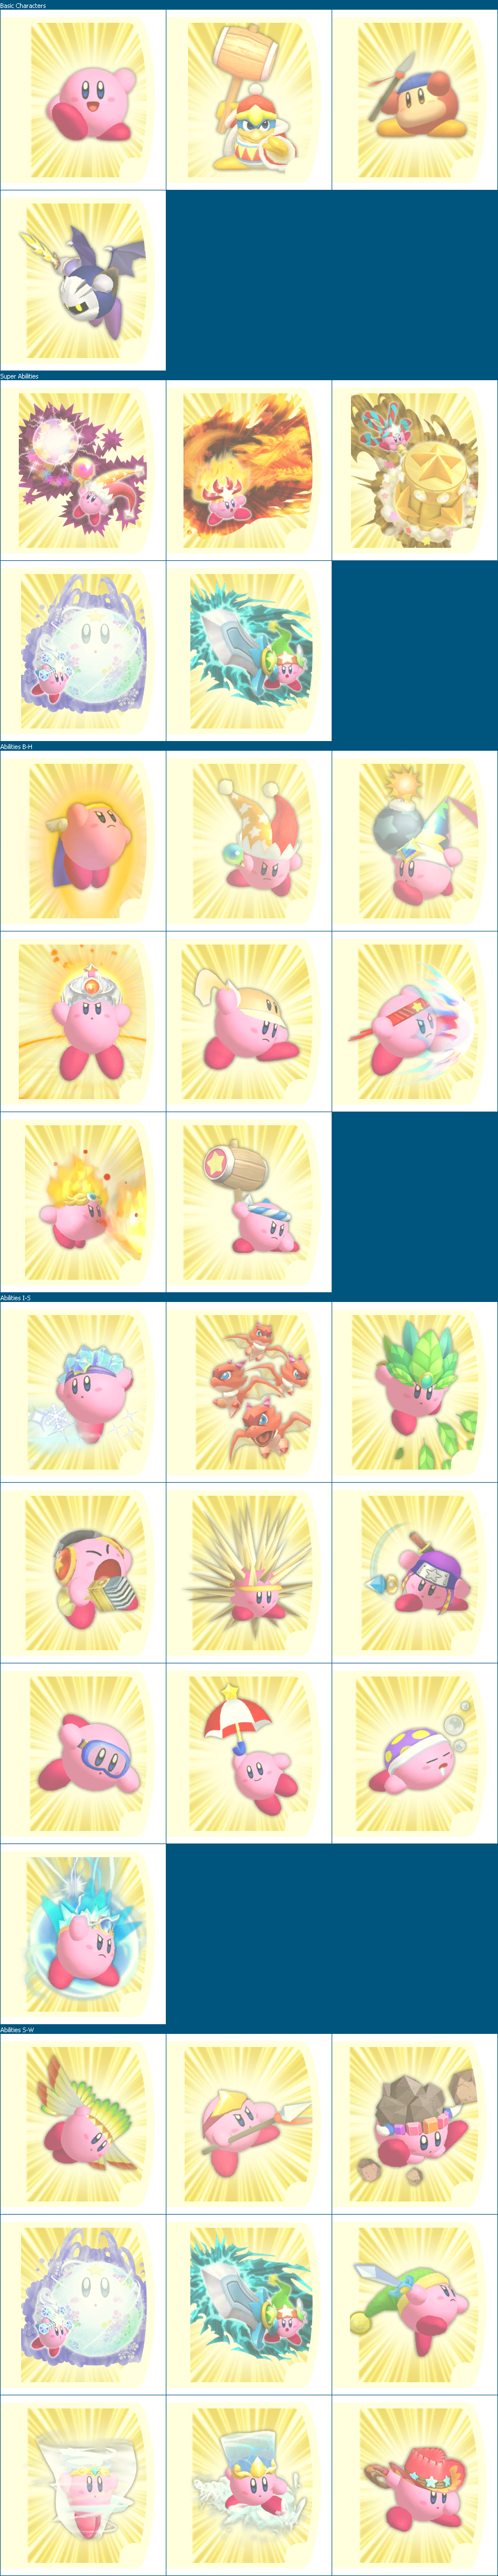 Kirby's Adventure para Wii U - Wii